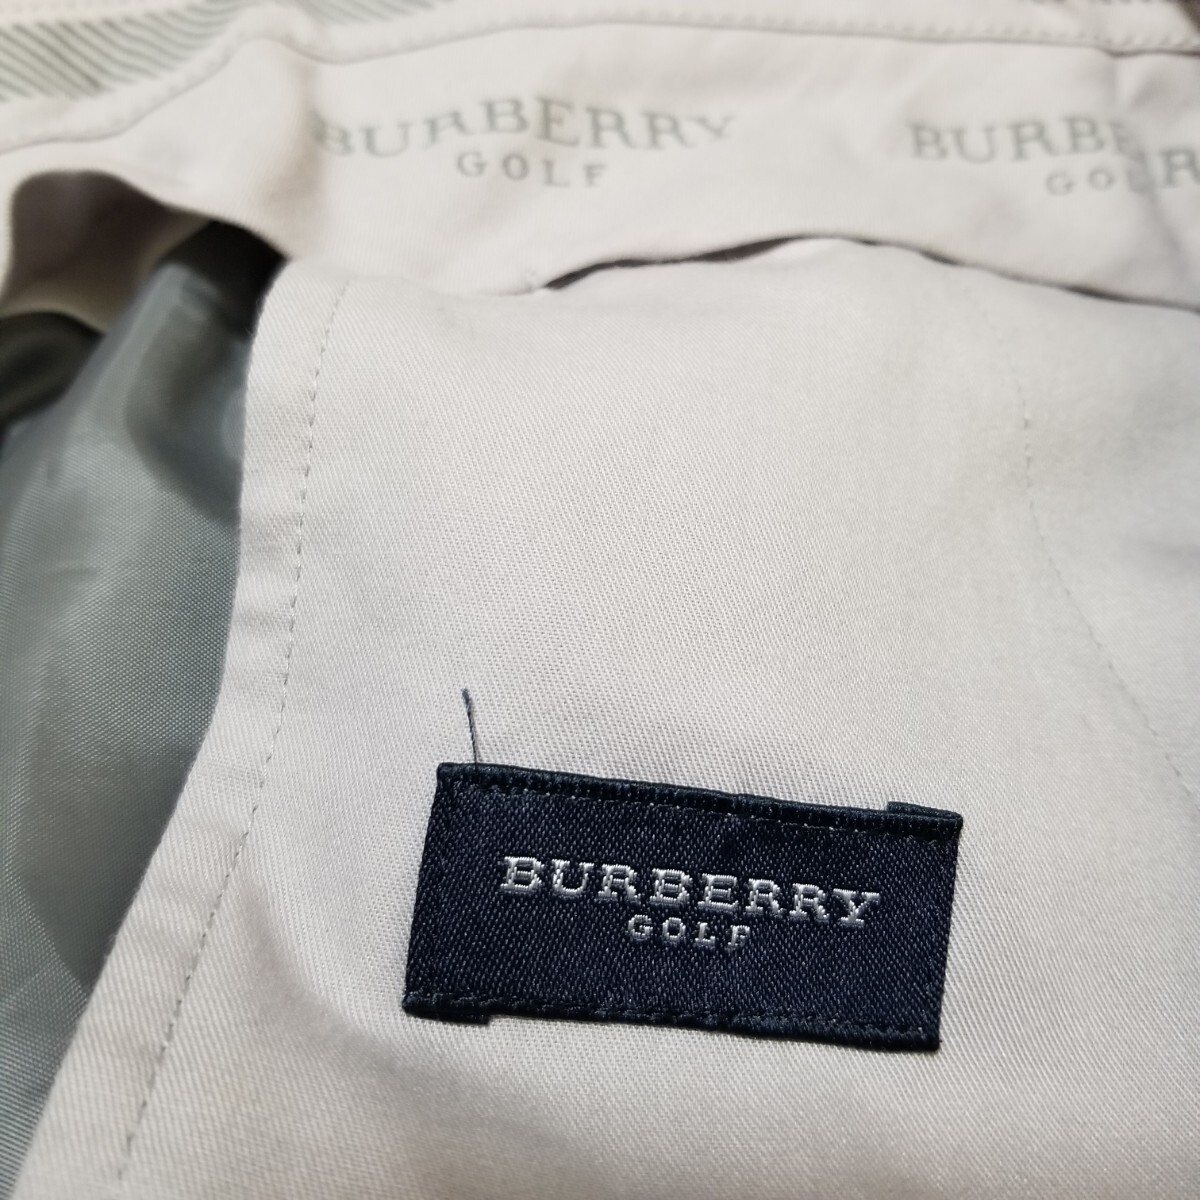 BURBERRY GOLF Burberry Golf брюки слаксы 88 проверка серый мужской 